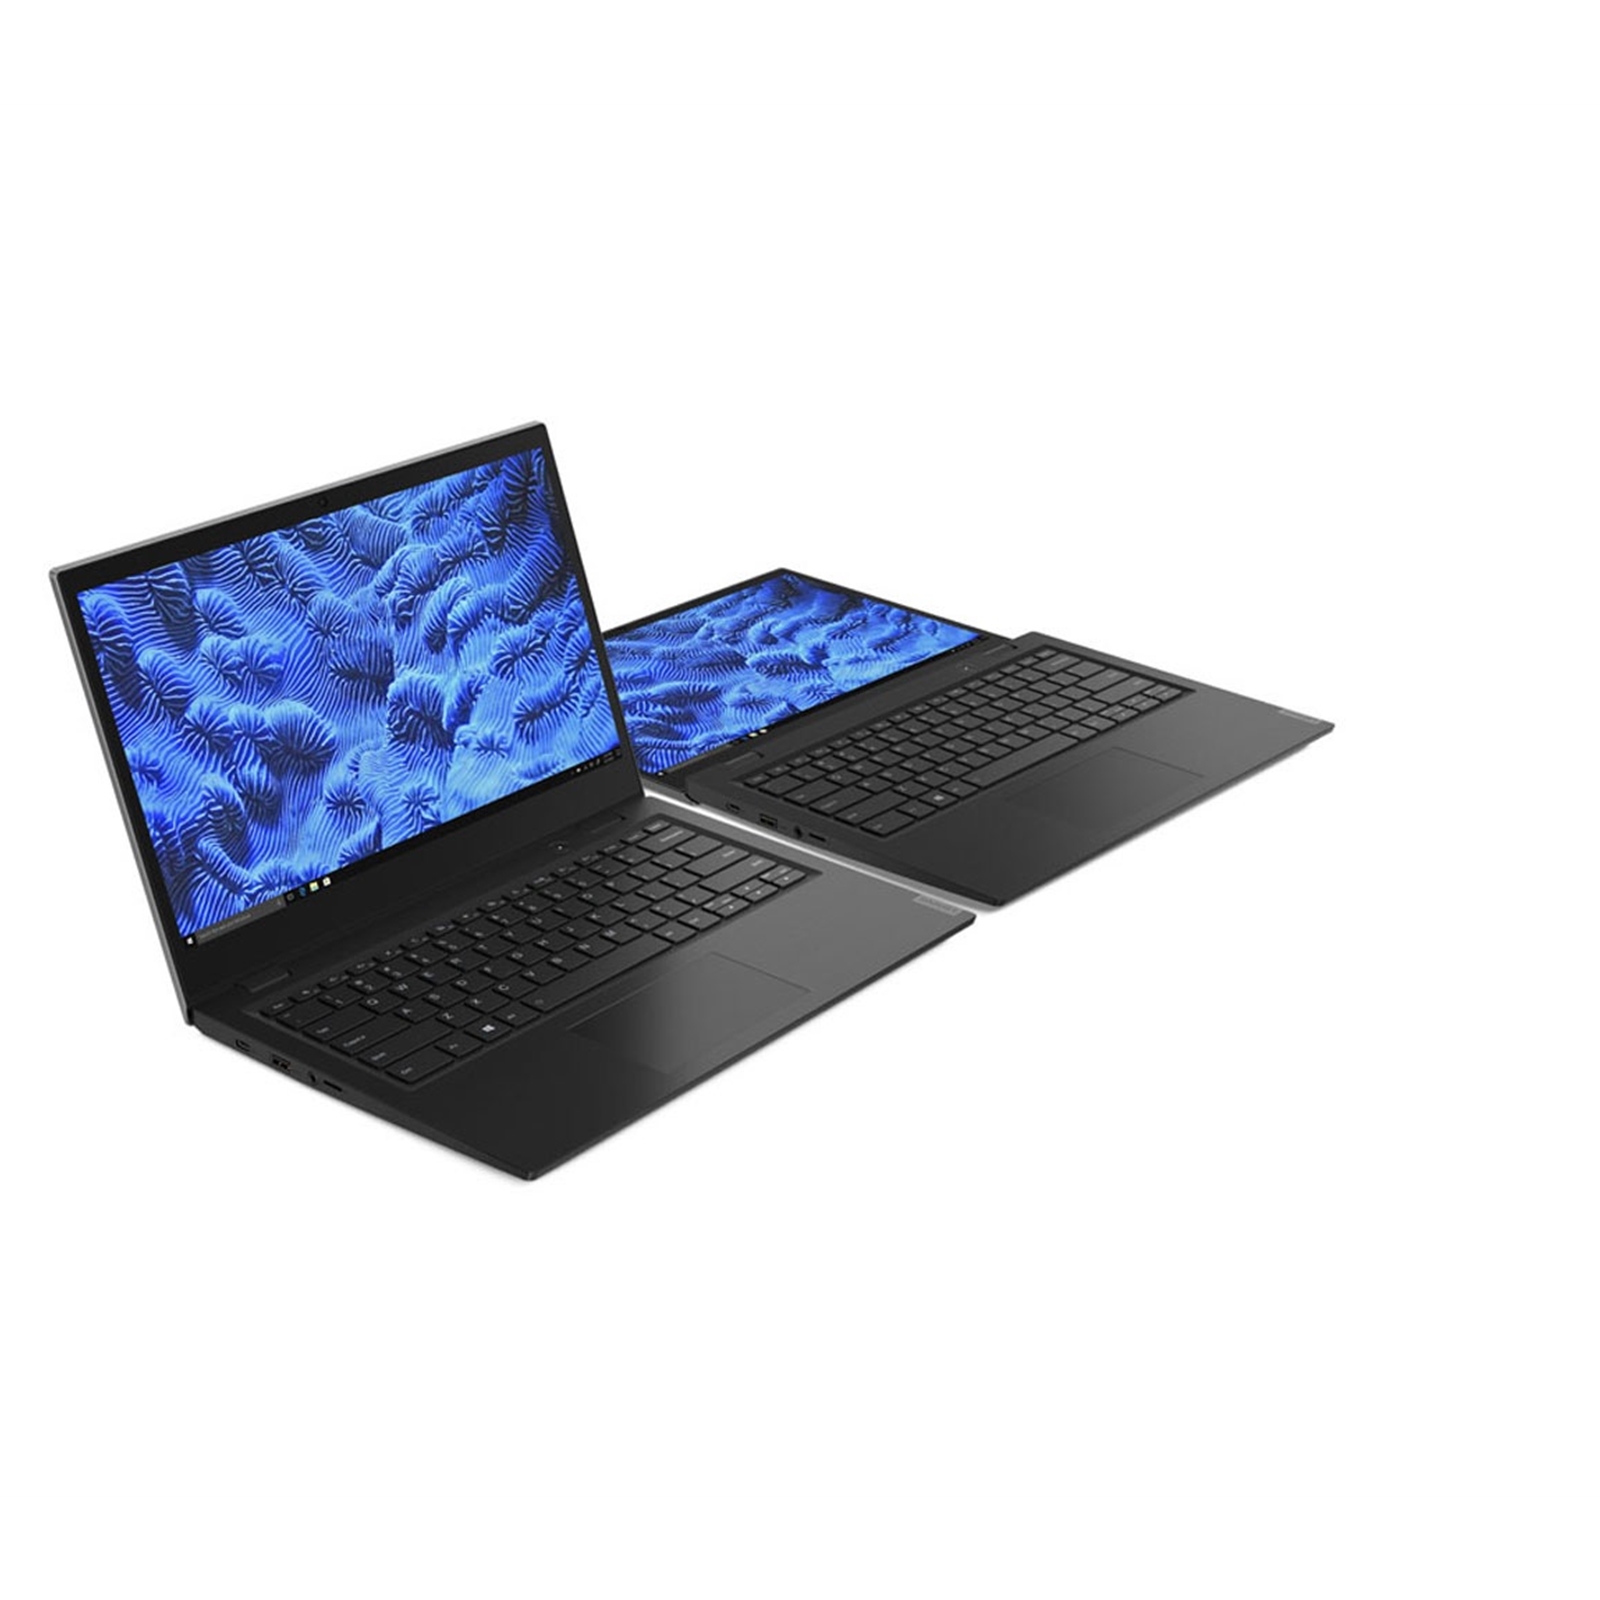 Lenovo WinBook 14w 81MQ000DUK Notebook, 14 Inch Full HD 1080p Screen, AMD A6-9220C, 4GB RAM, 128GB SSD, Windows 10 Pro